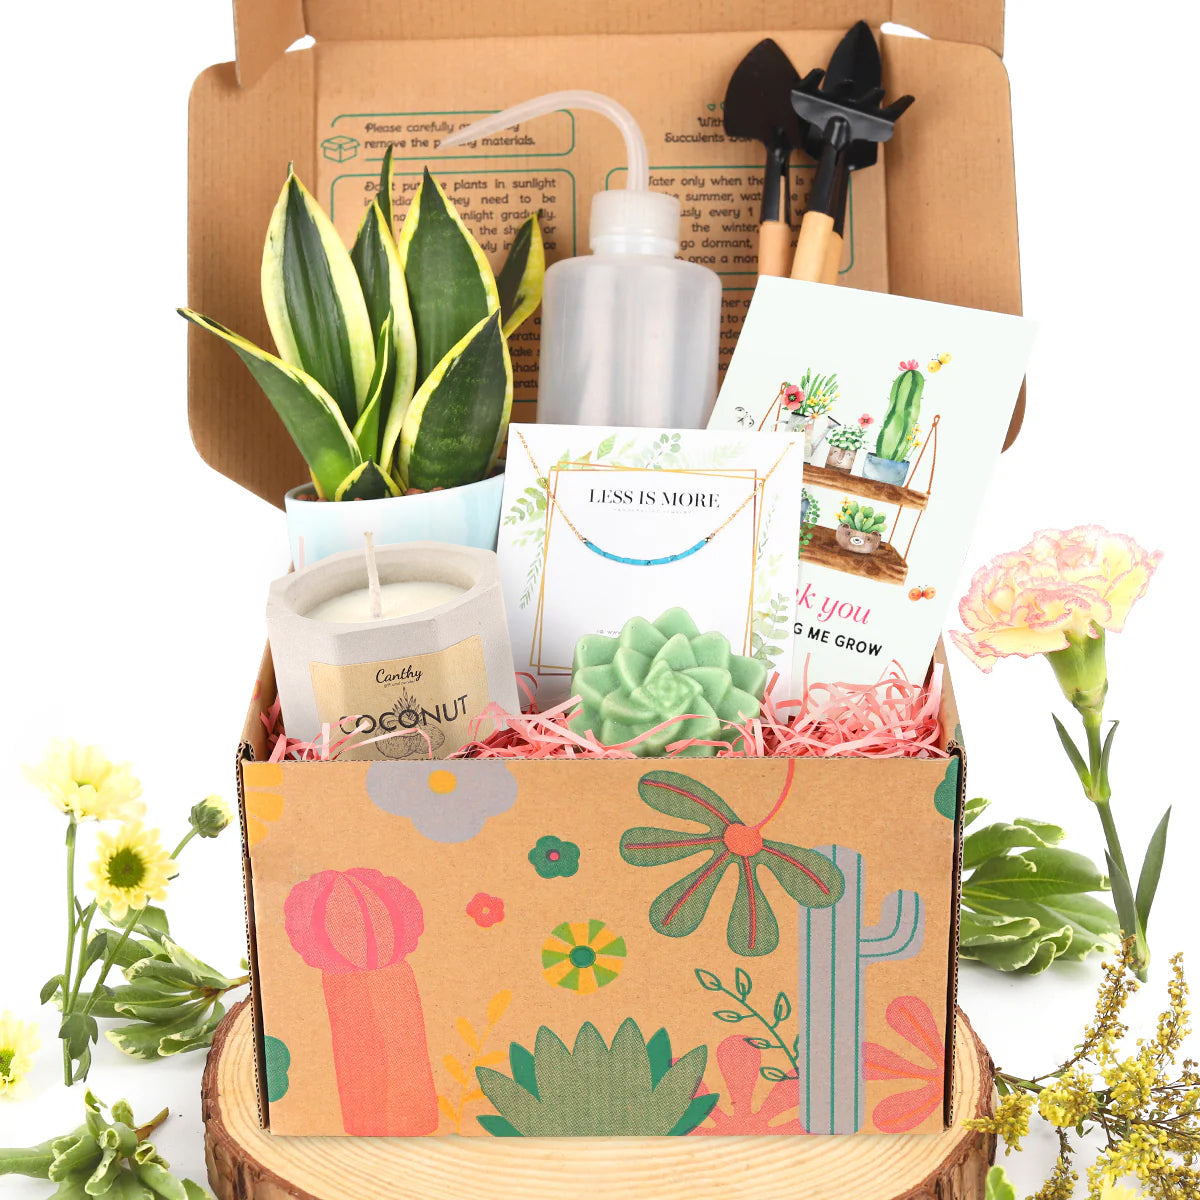 Premium Houseplant Gift Box, Premium Houseplant Gift Box for sale, buy Premium Houseplant Gift Box online, gift box with greeting card